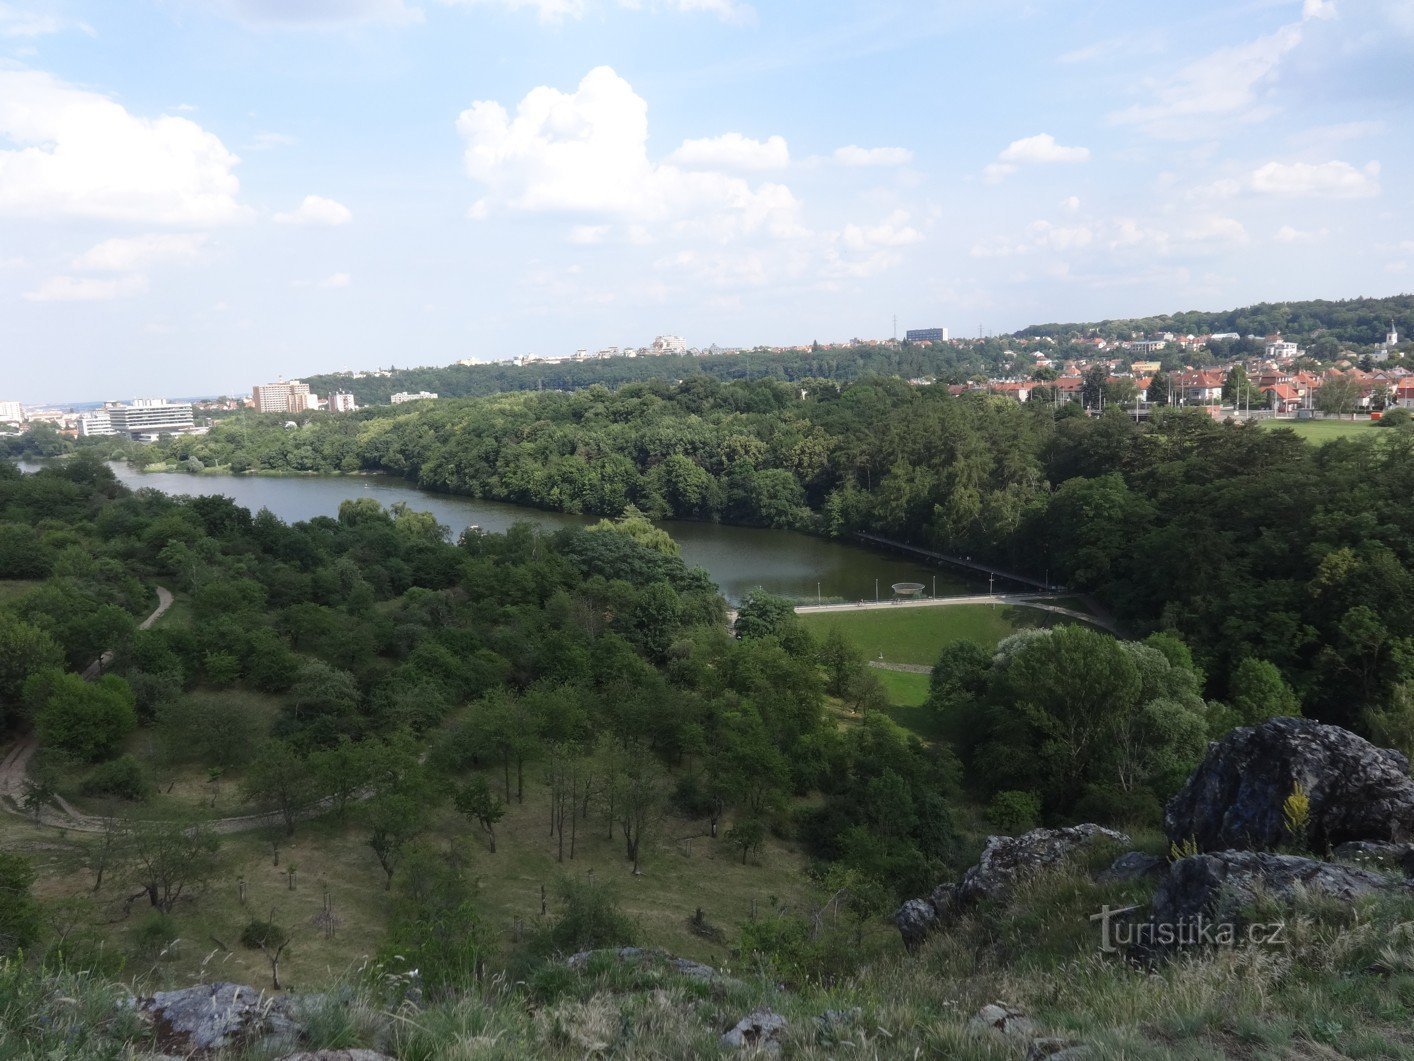 Park przyrody Šárka na obrzeżach stolicy